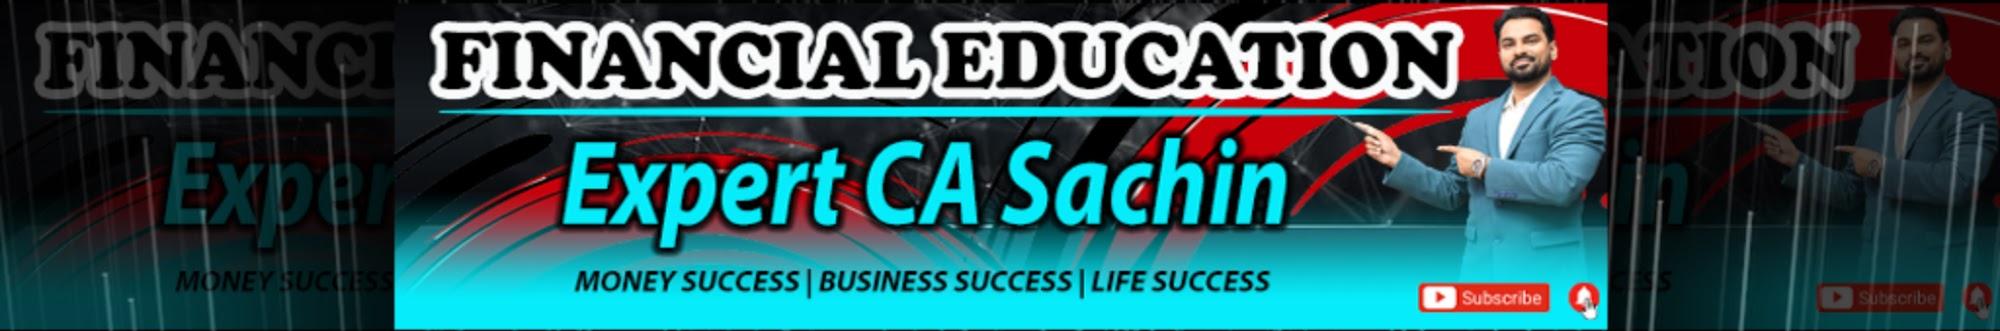 Expert CA Sachin (Financial Education) 